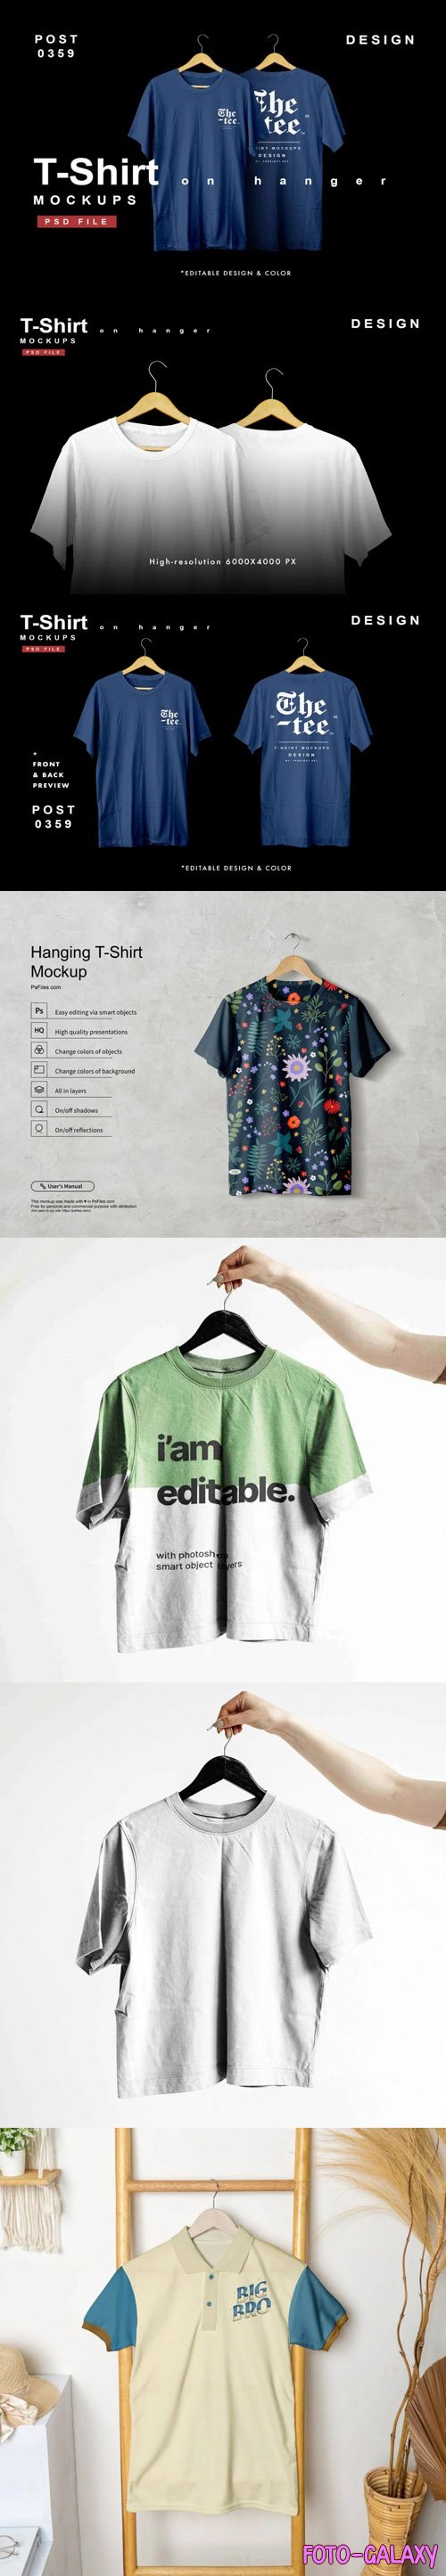 Hanging T-Shirt PSD Mockups Templates Collection|